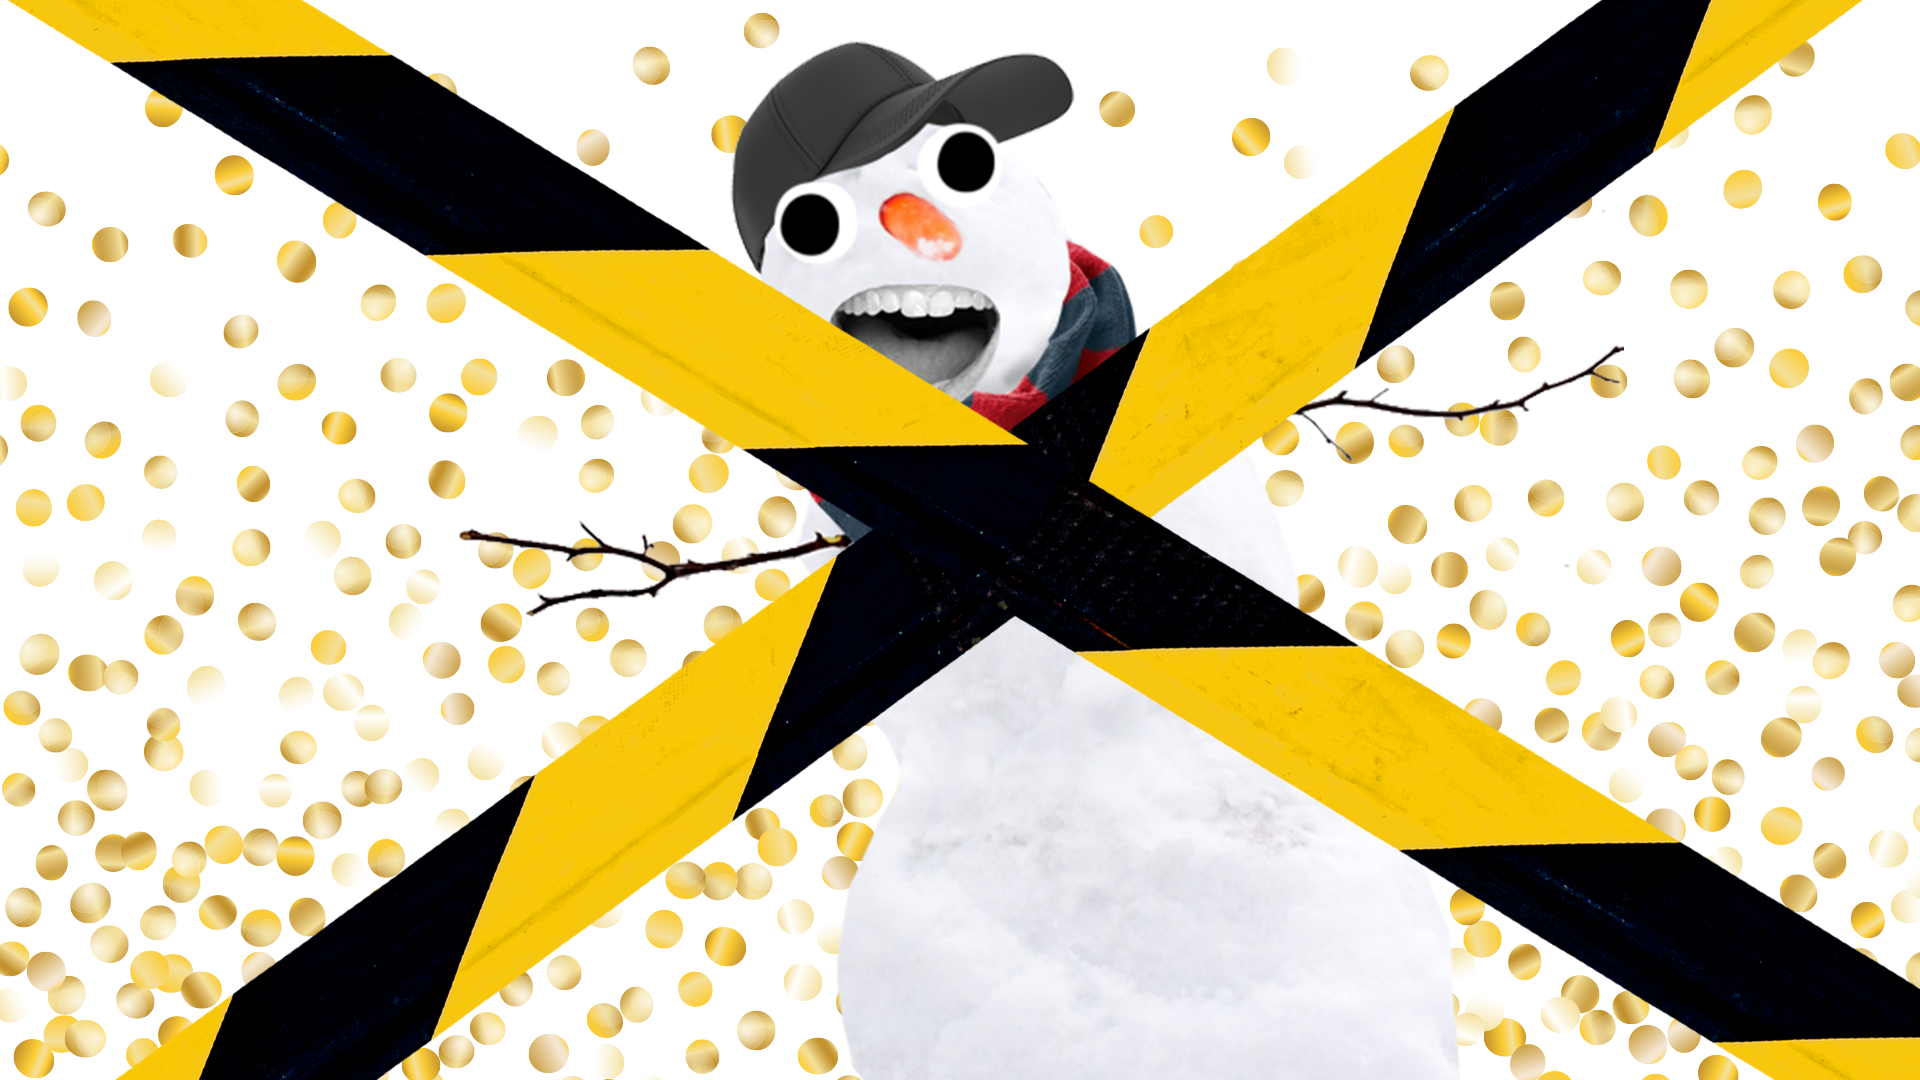 Beano snowman on glitter background with hazard tape